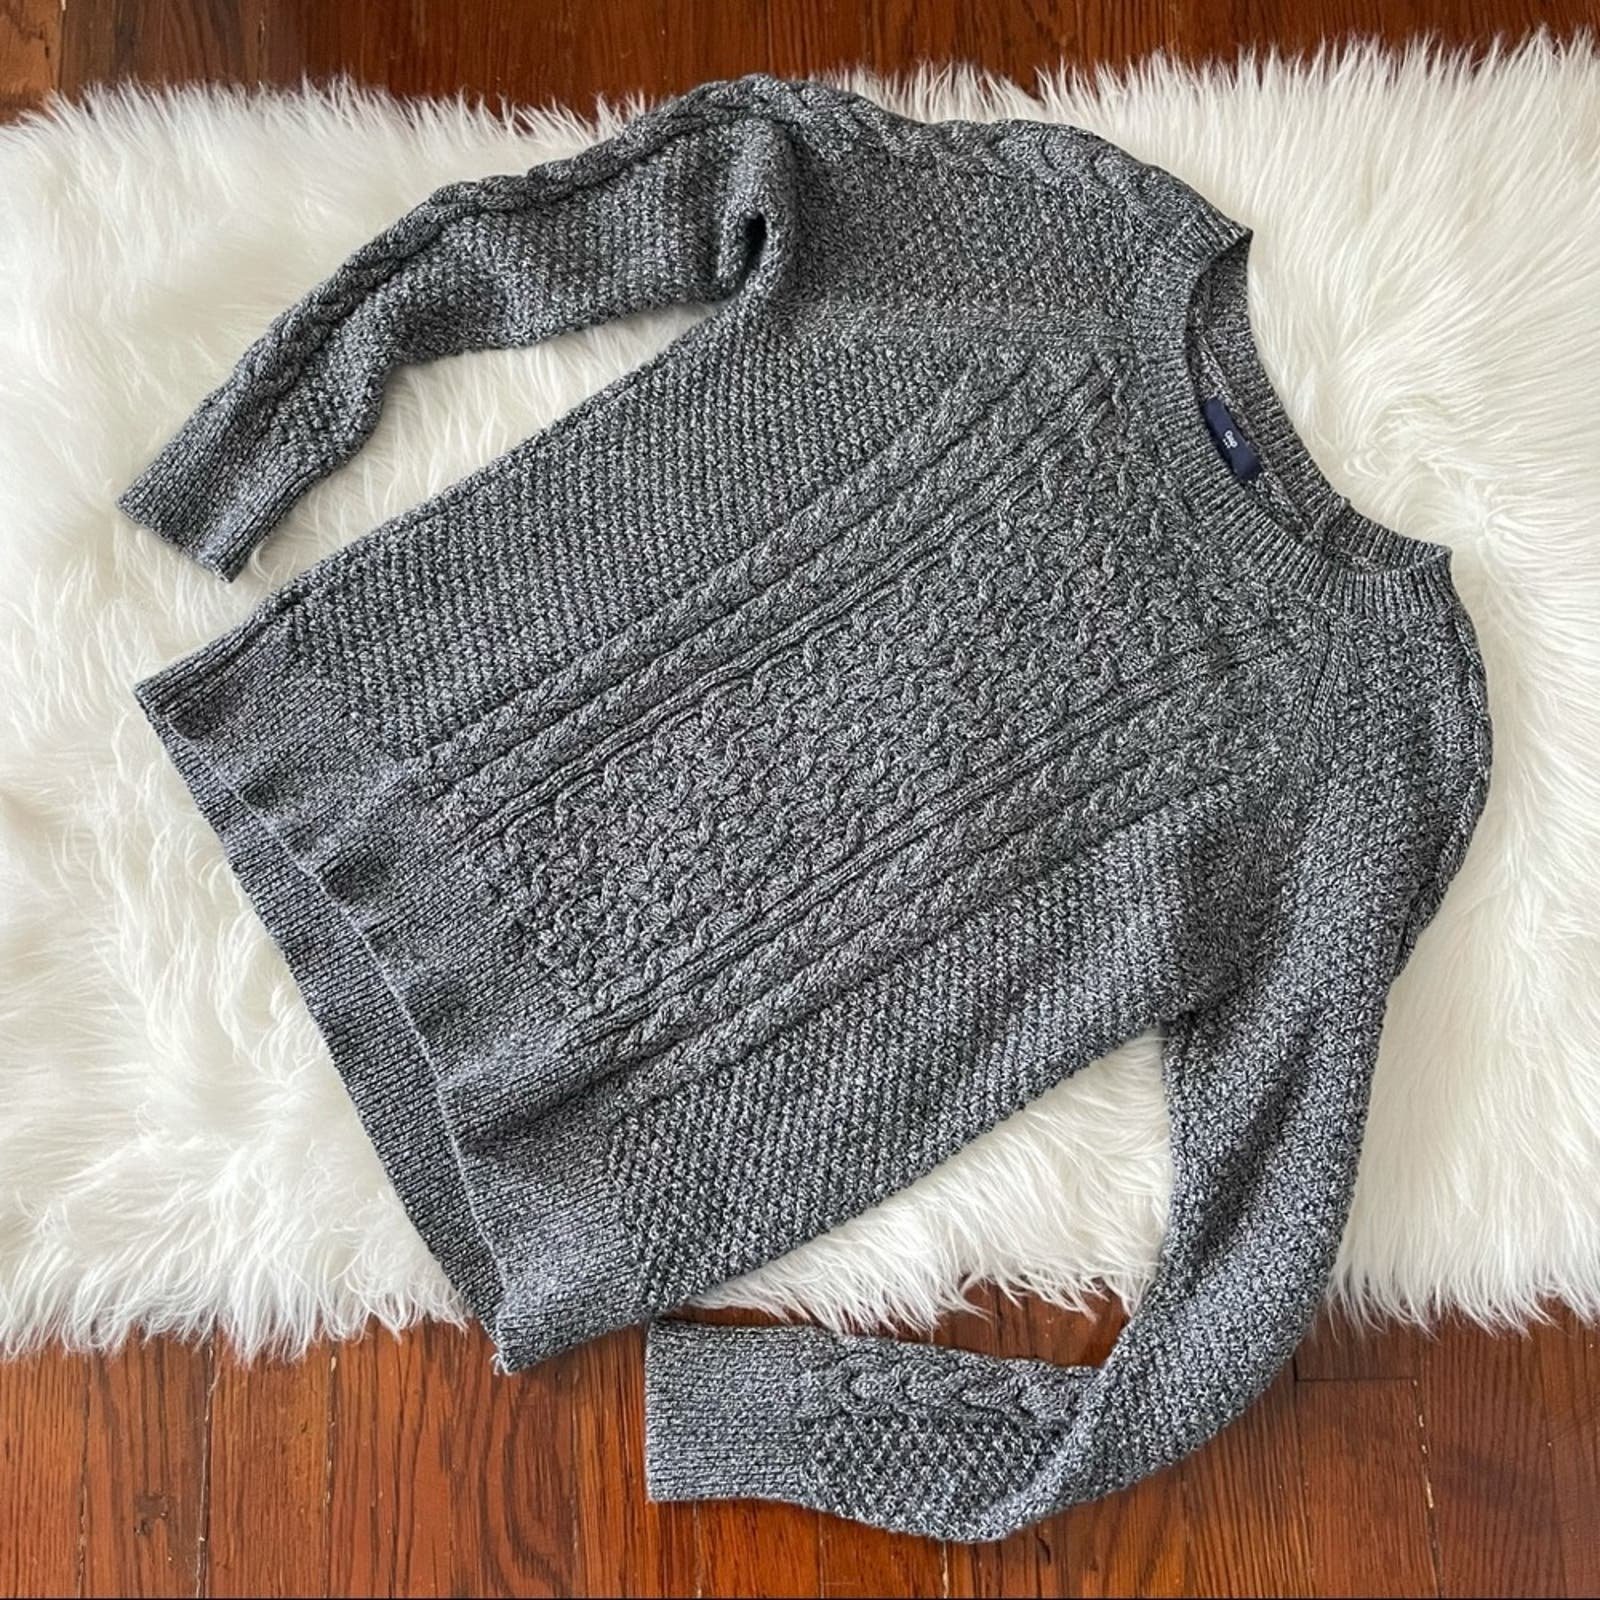 Simple GAP Heather Black Charcoal Sweater Basic Size Me